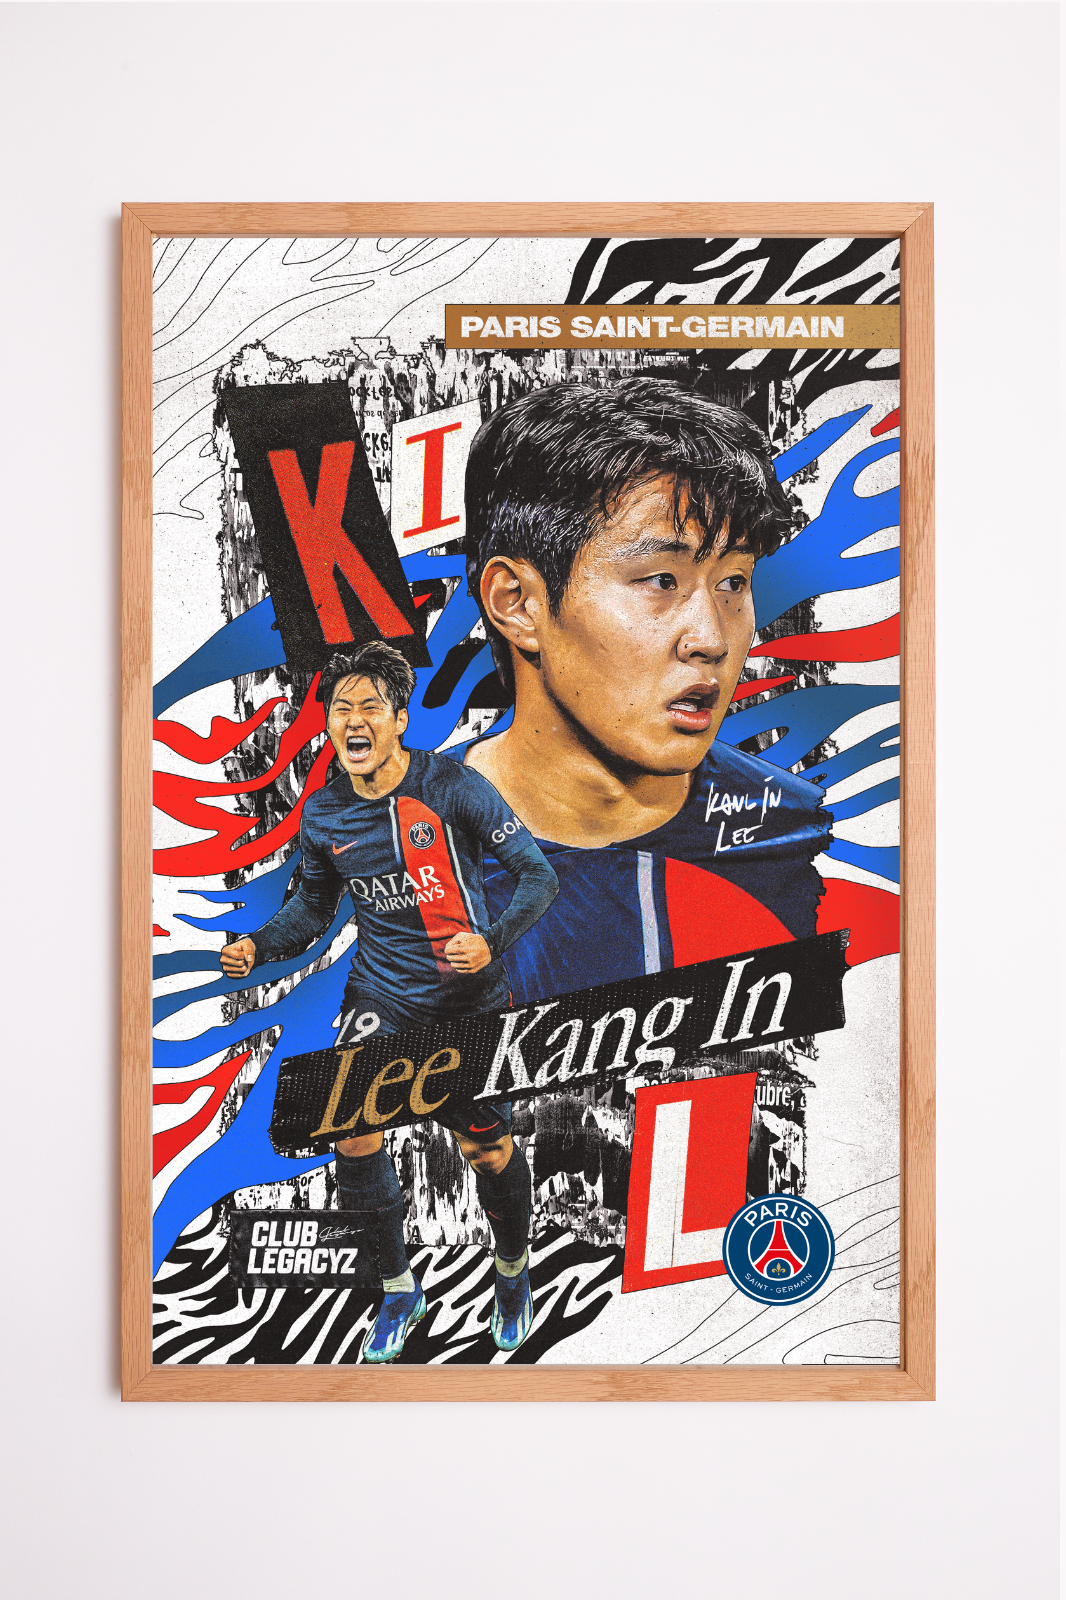 Paris Saint-Germain - Lee Kang-in Poster limited to 999